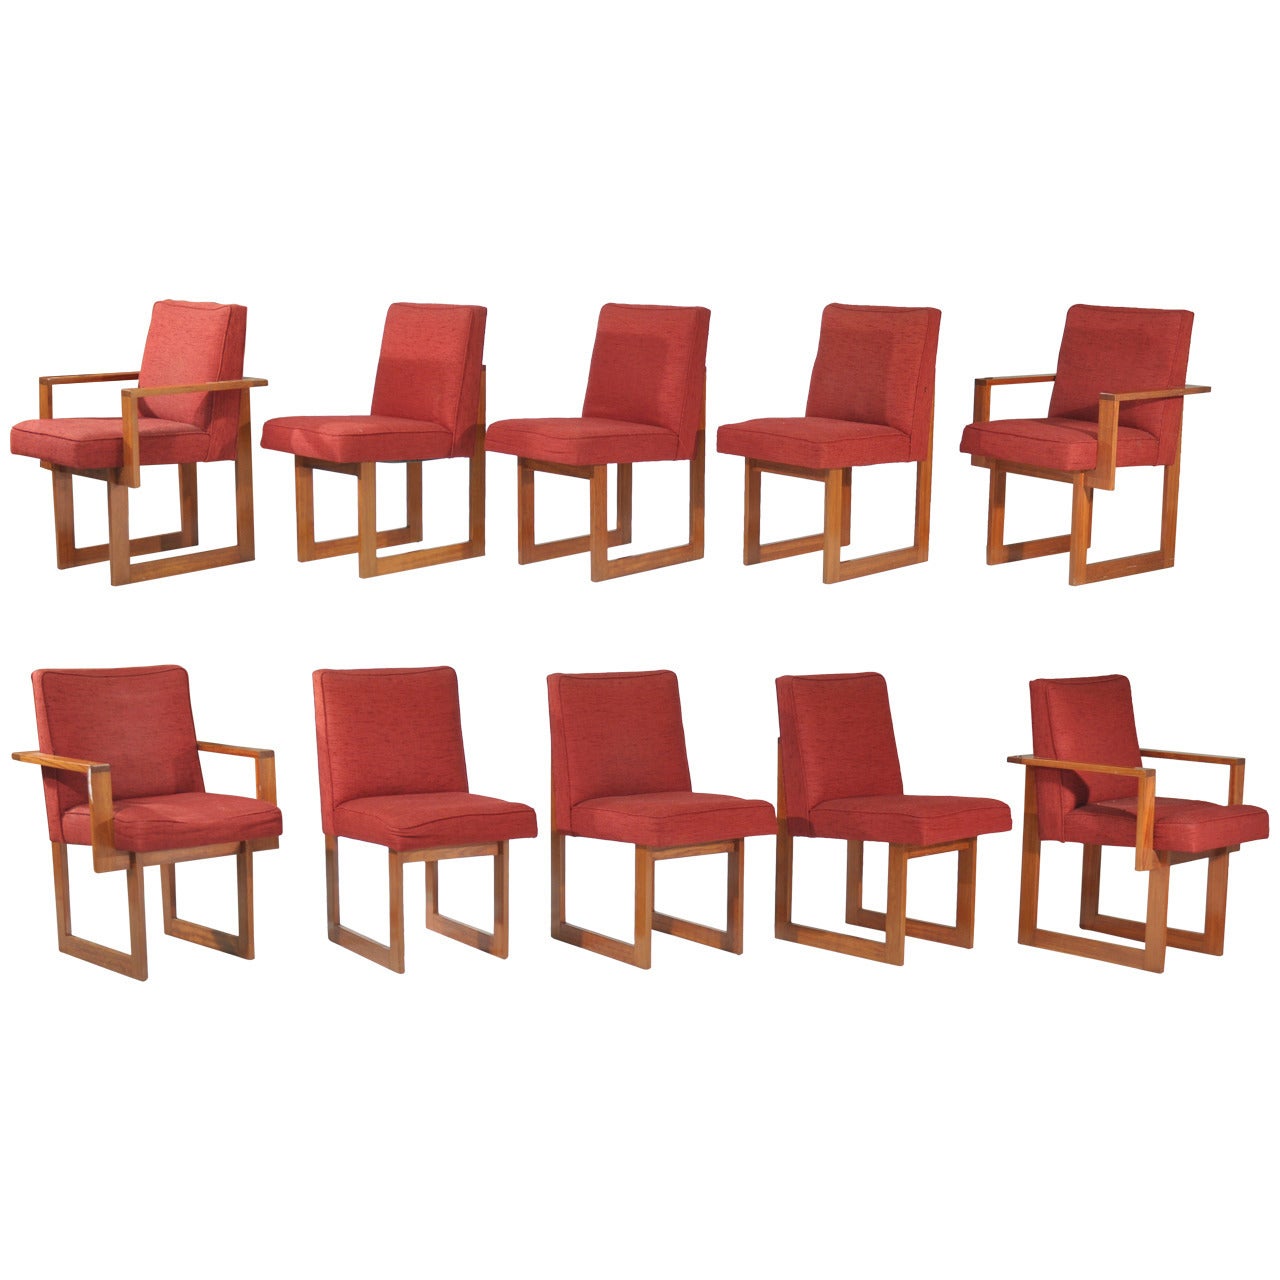 Rare Vladimir Kagan Cubist Dining Chair Set For Sale